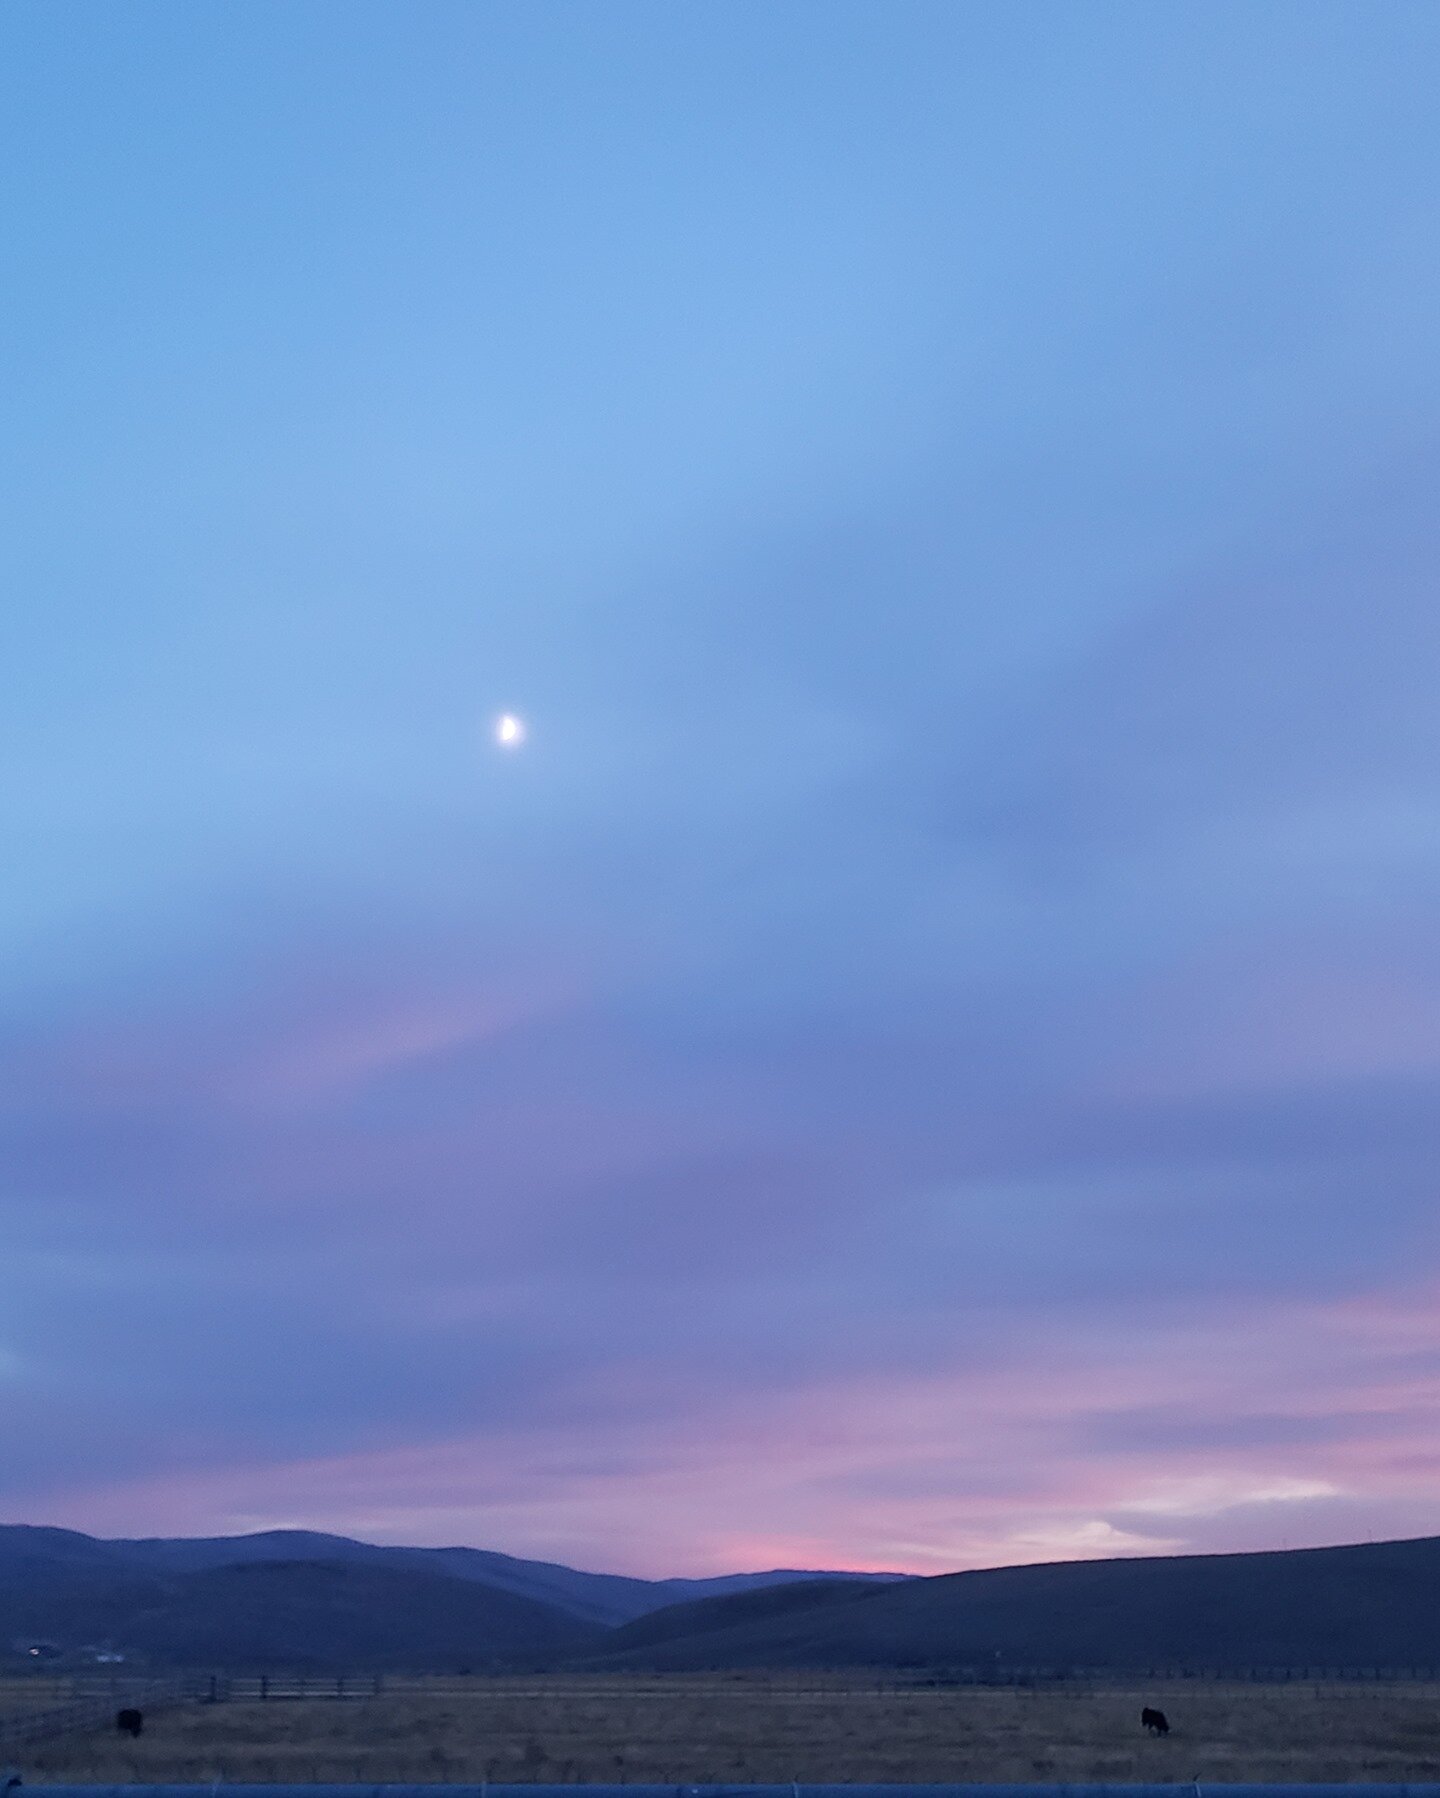 What a beautiful moonrise. Do you take a few minutes to appreciate your surroundings?